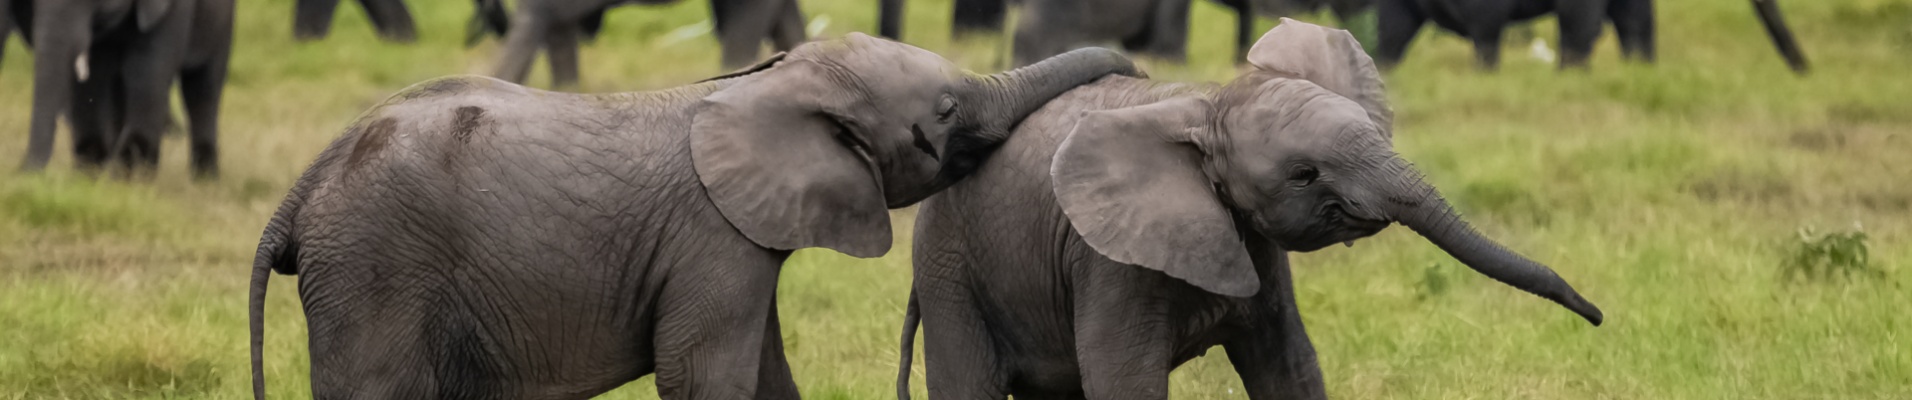 elephant-famille-inde